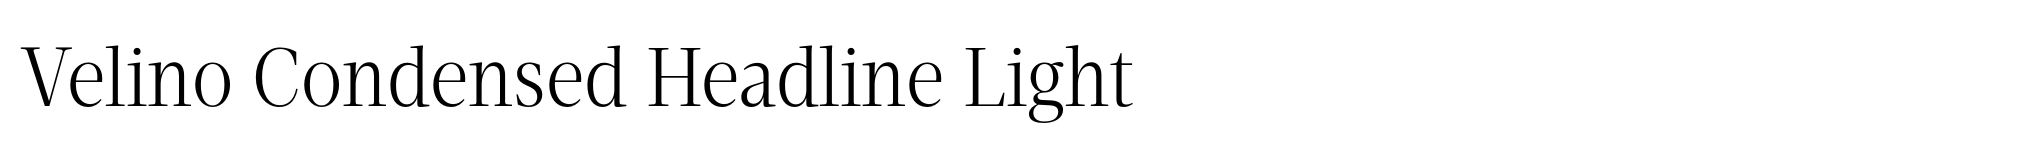 Velino Condensed Headline Light image